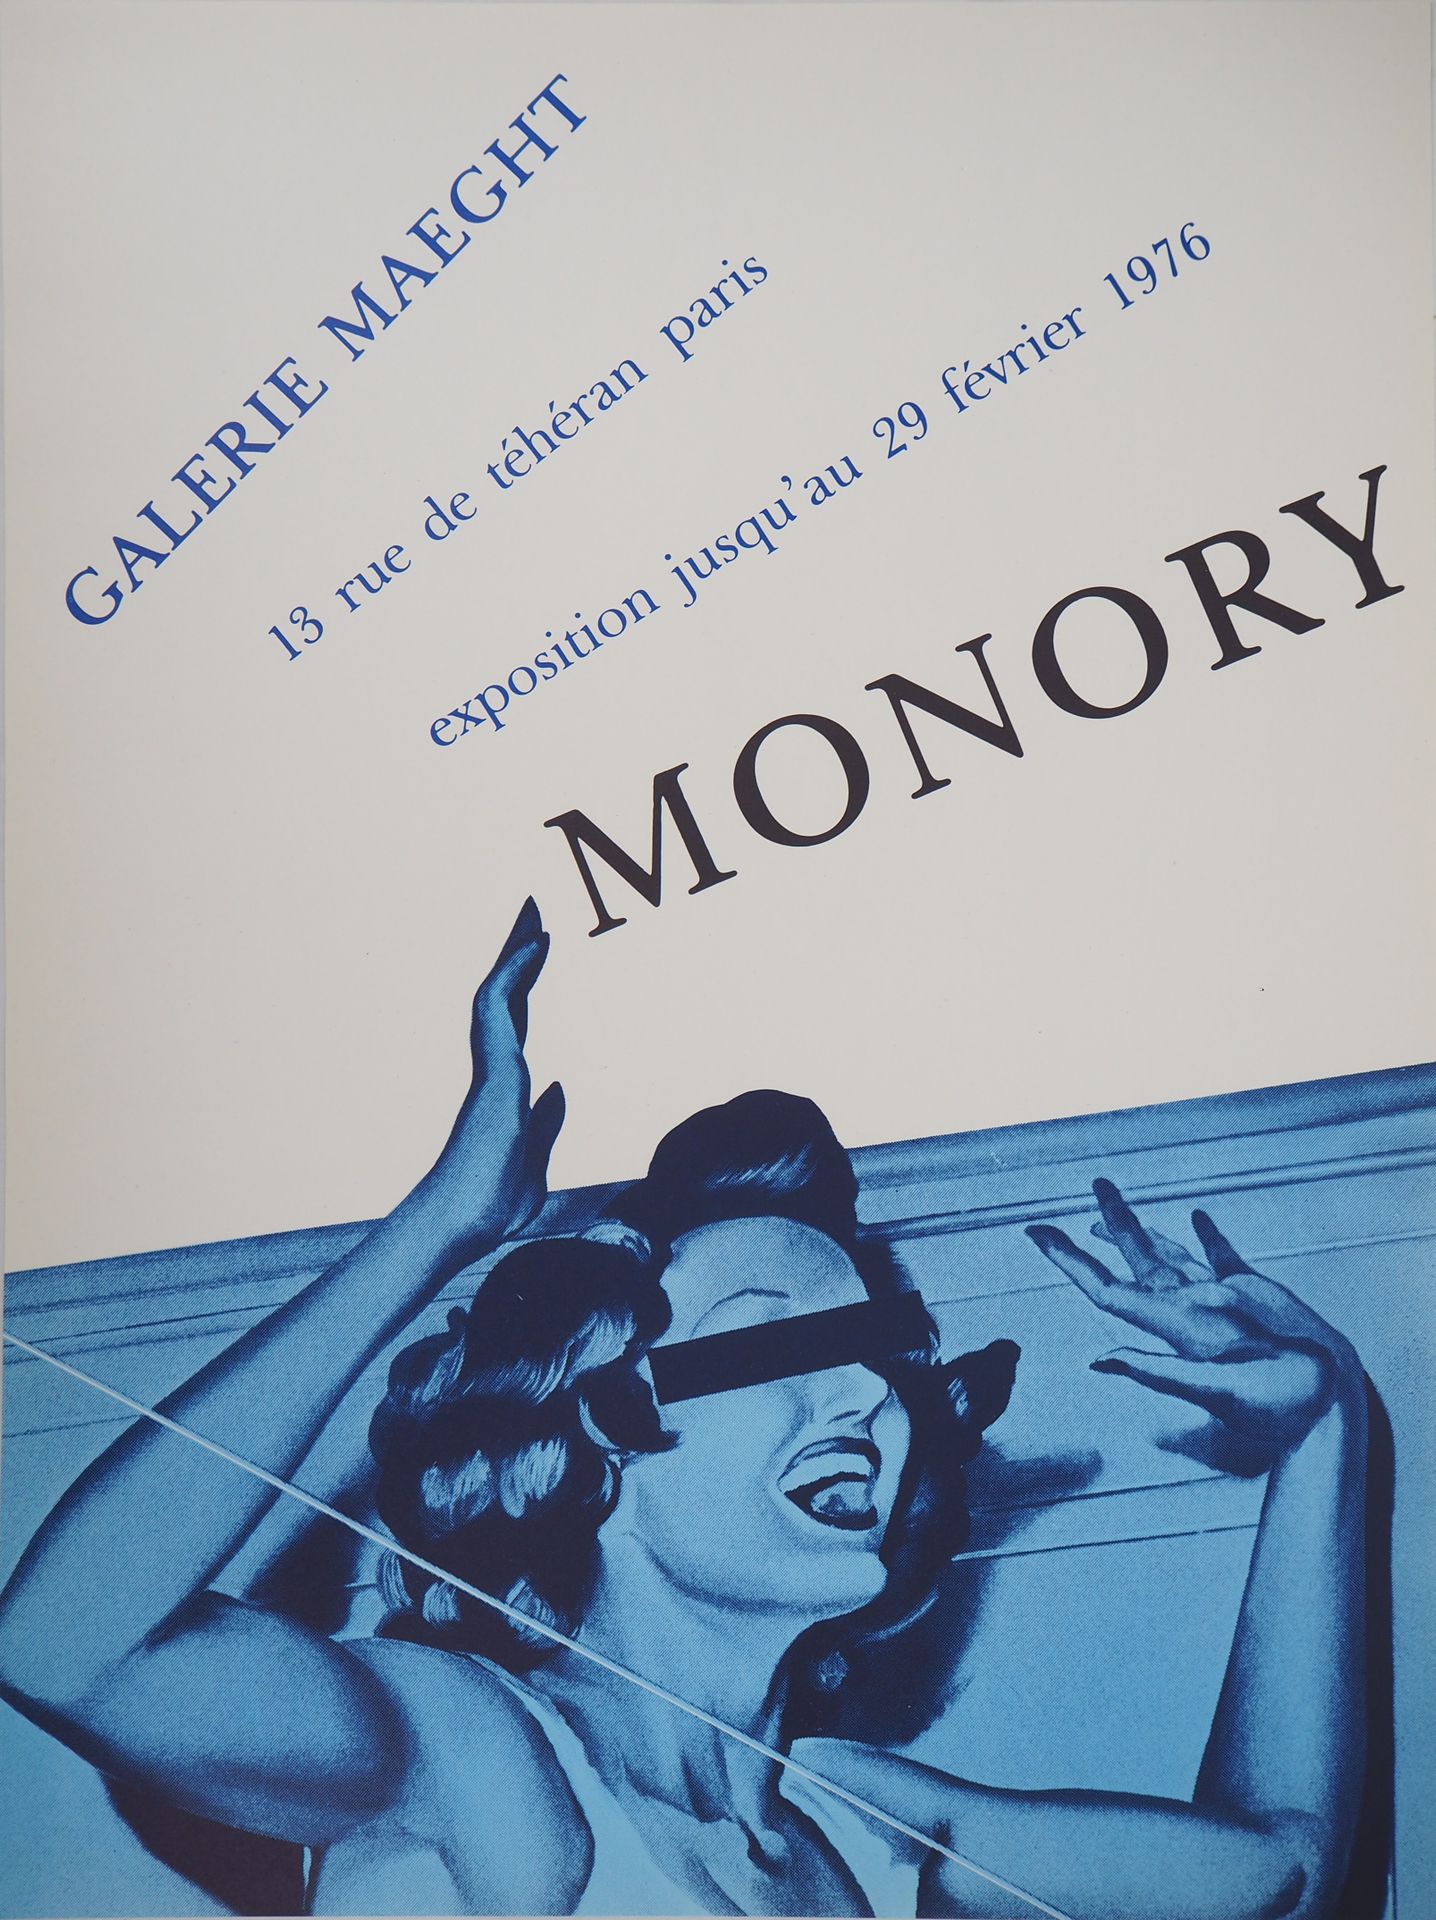 Jacques MONORY 雅克-莫诺里

惊讶的女孩, 1976

原创复古石版画海报（直接色调印刷）。

纸上60 x 45厘米

1976年迈格特画廊为&hellip;